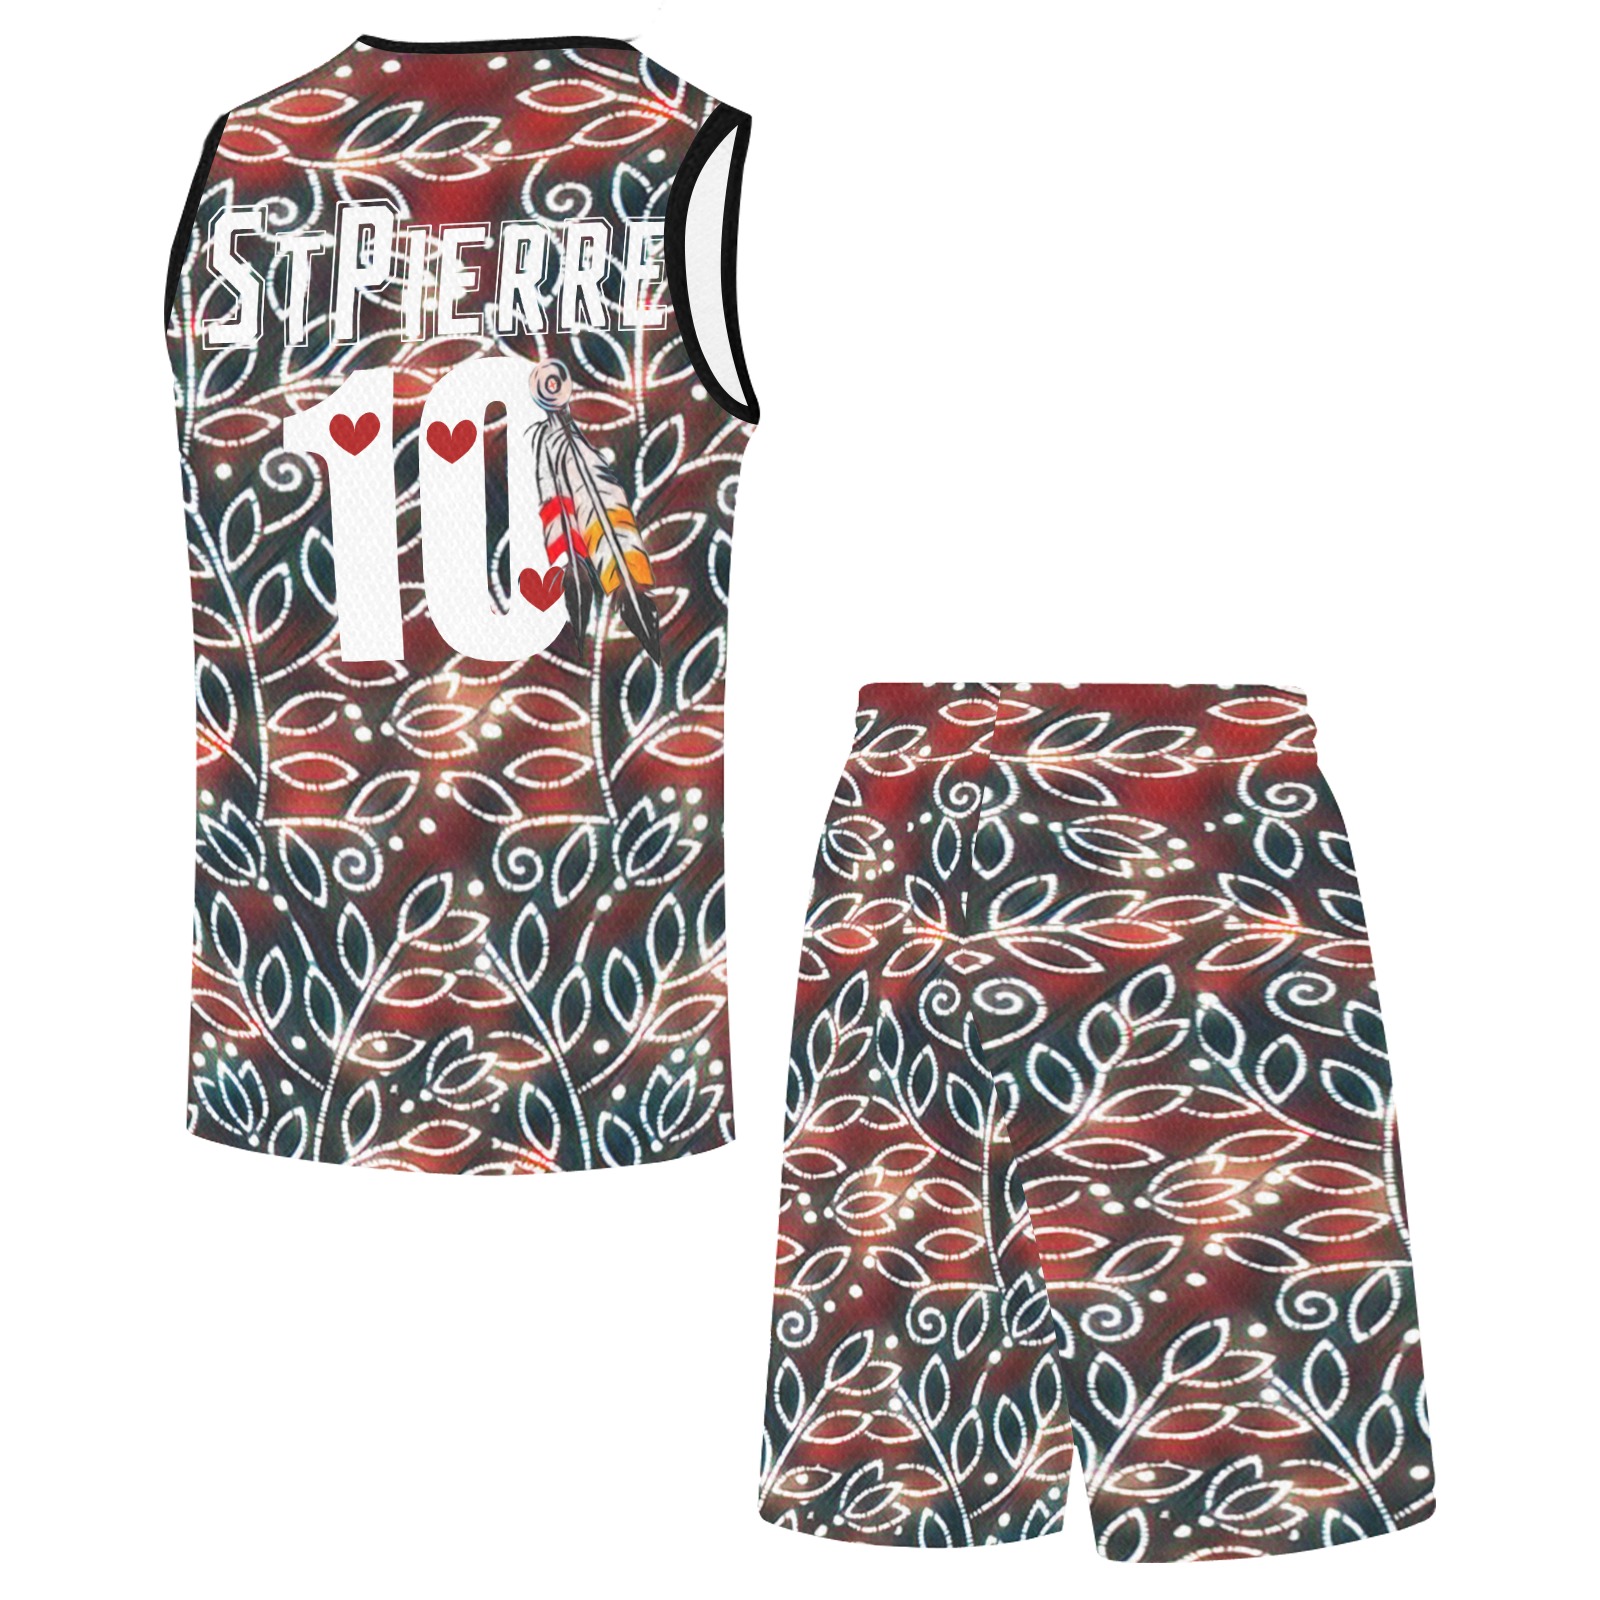 MMIW StPierre All Over Print Basketball Uniform